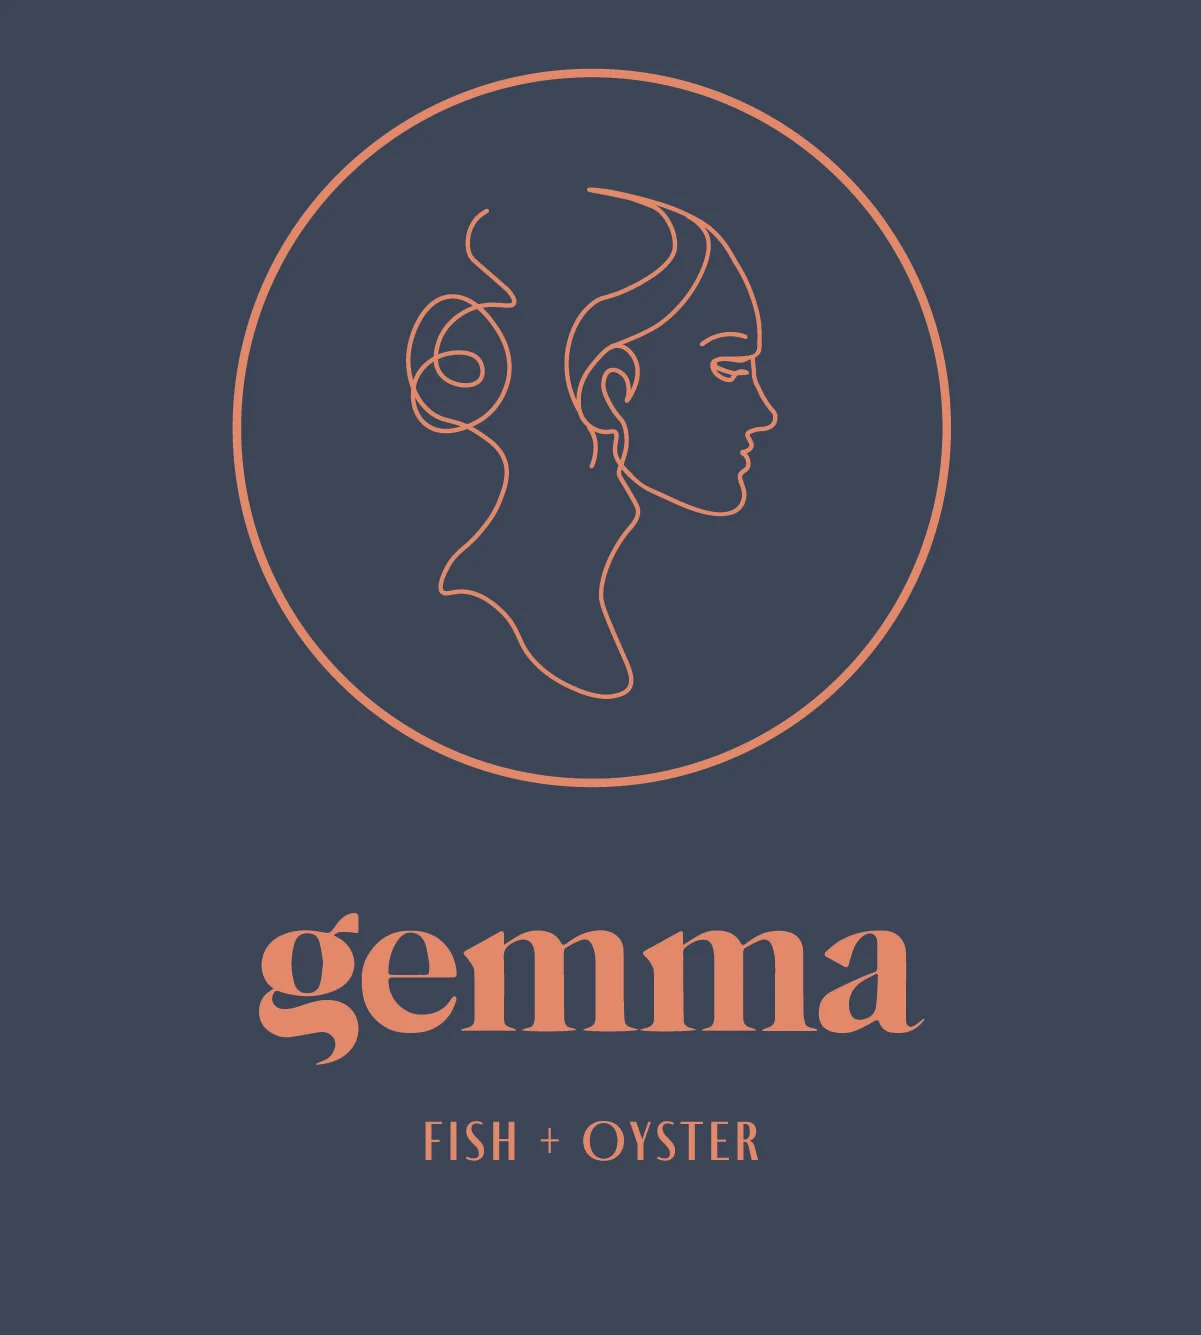 The logo for  Gemma Fish + Oyster restaurant